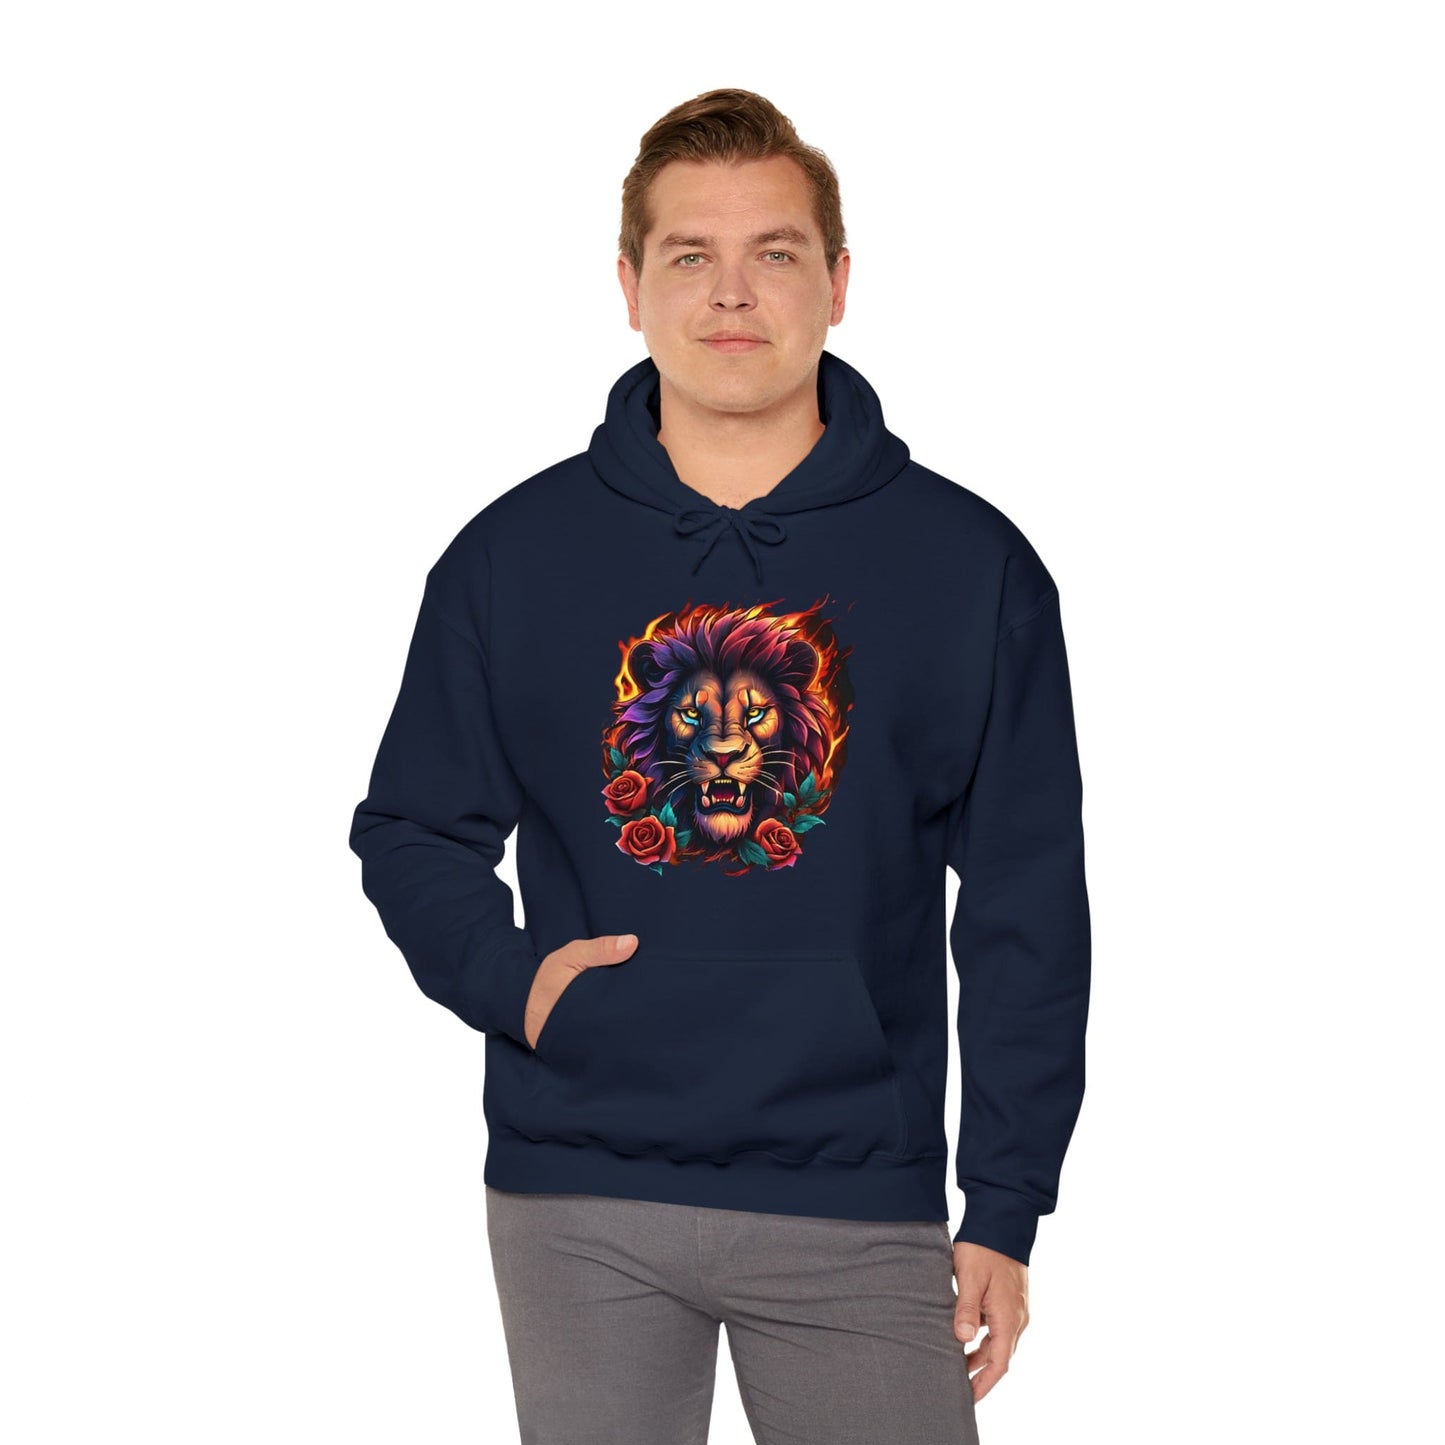 Eye of Lion Flames and Roses Hooded Sweatshirt Flashlander